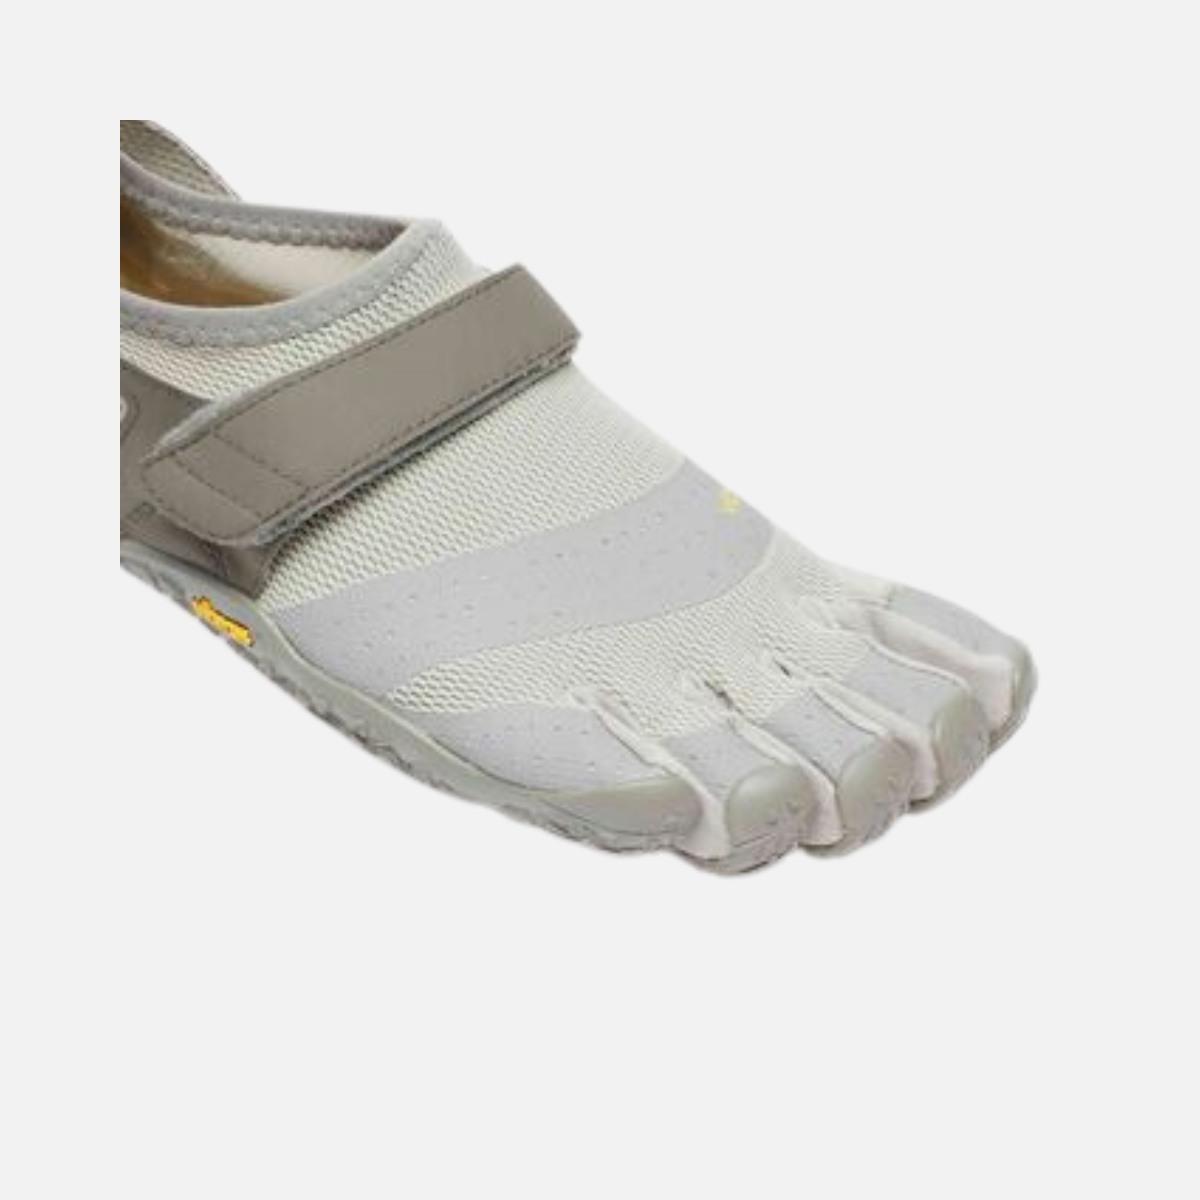 Vibram V-Aqua Men's Barefoot Shoe -Grey